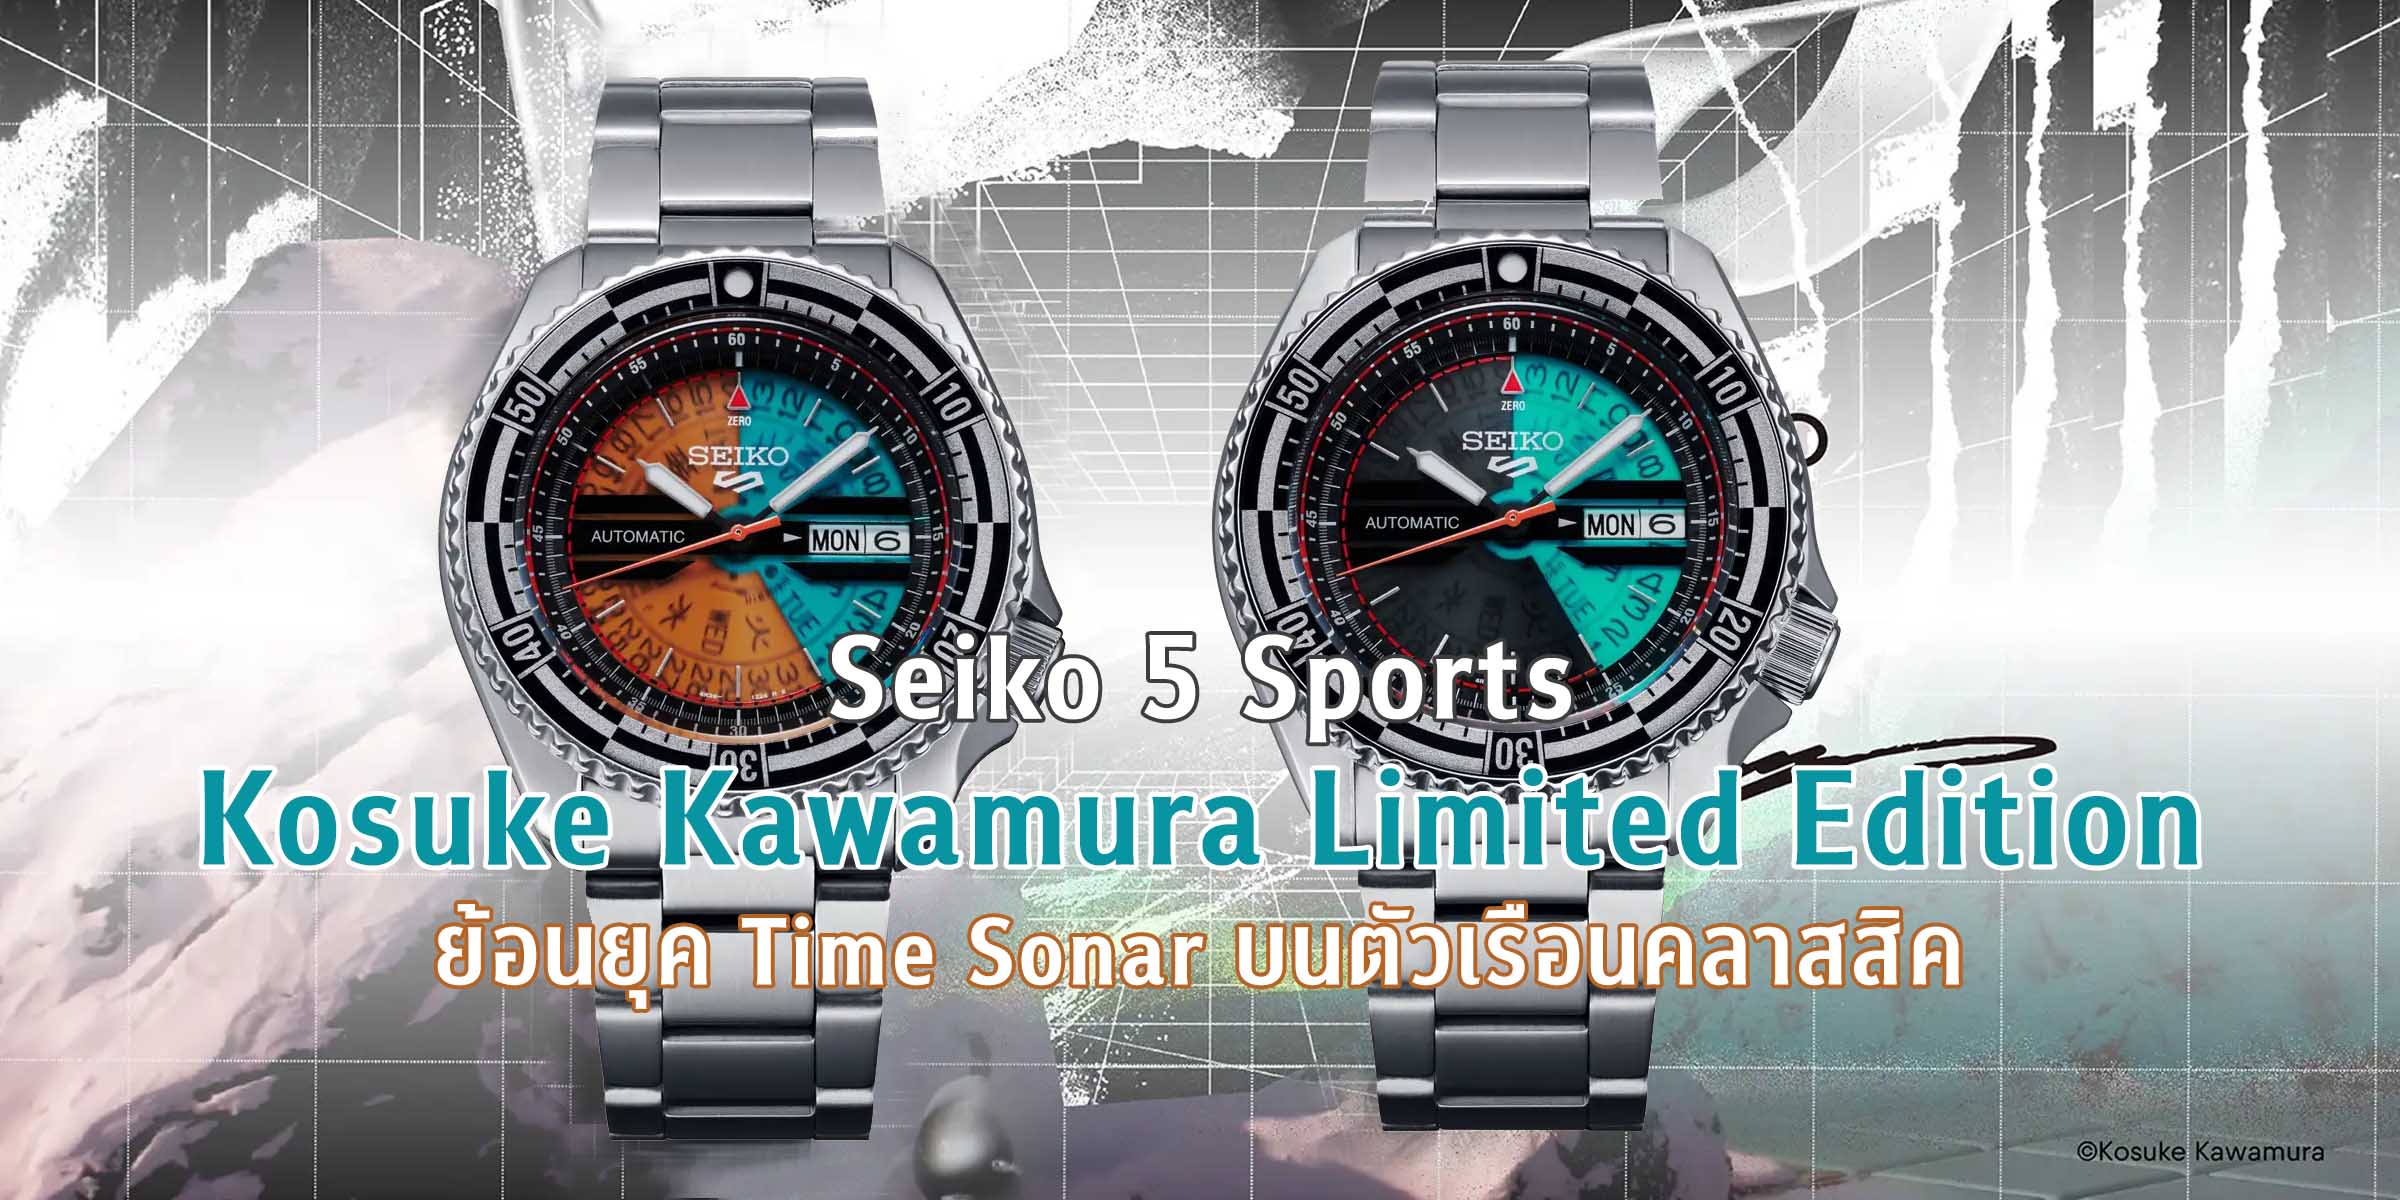 Seiko 5 Sports Kosuke Kawamura Limited Edition